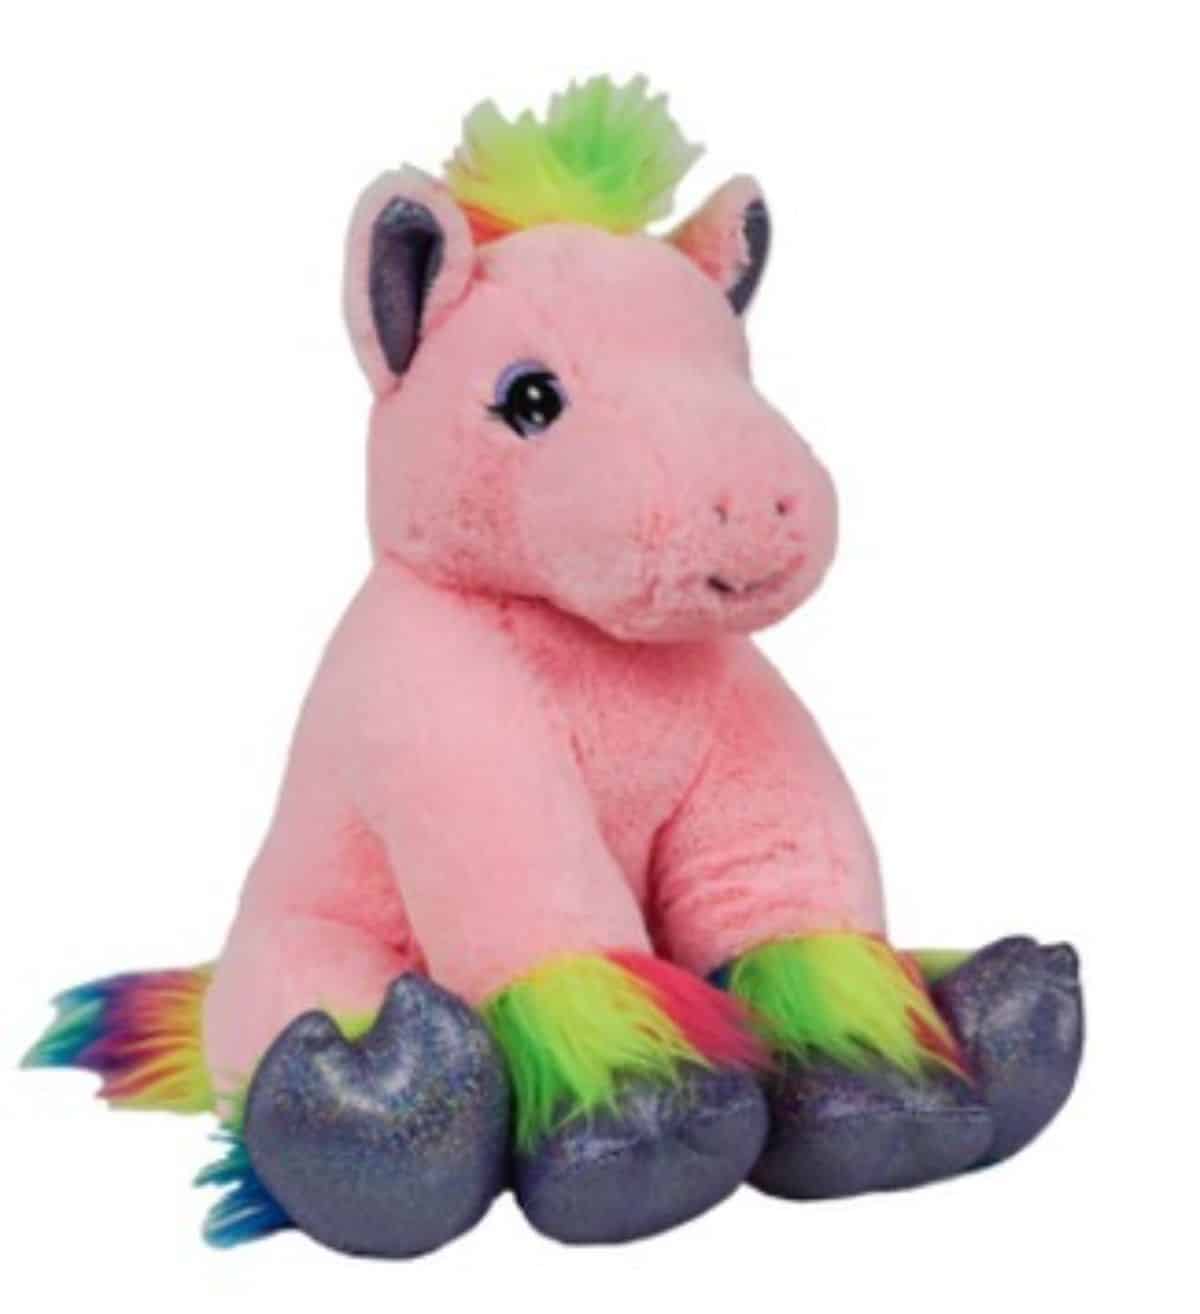 PInk-rainbow pony plush toy.